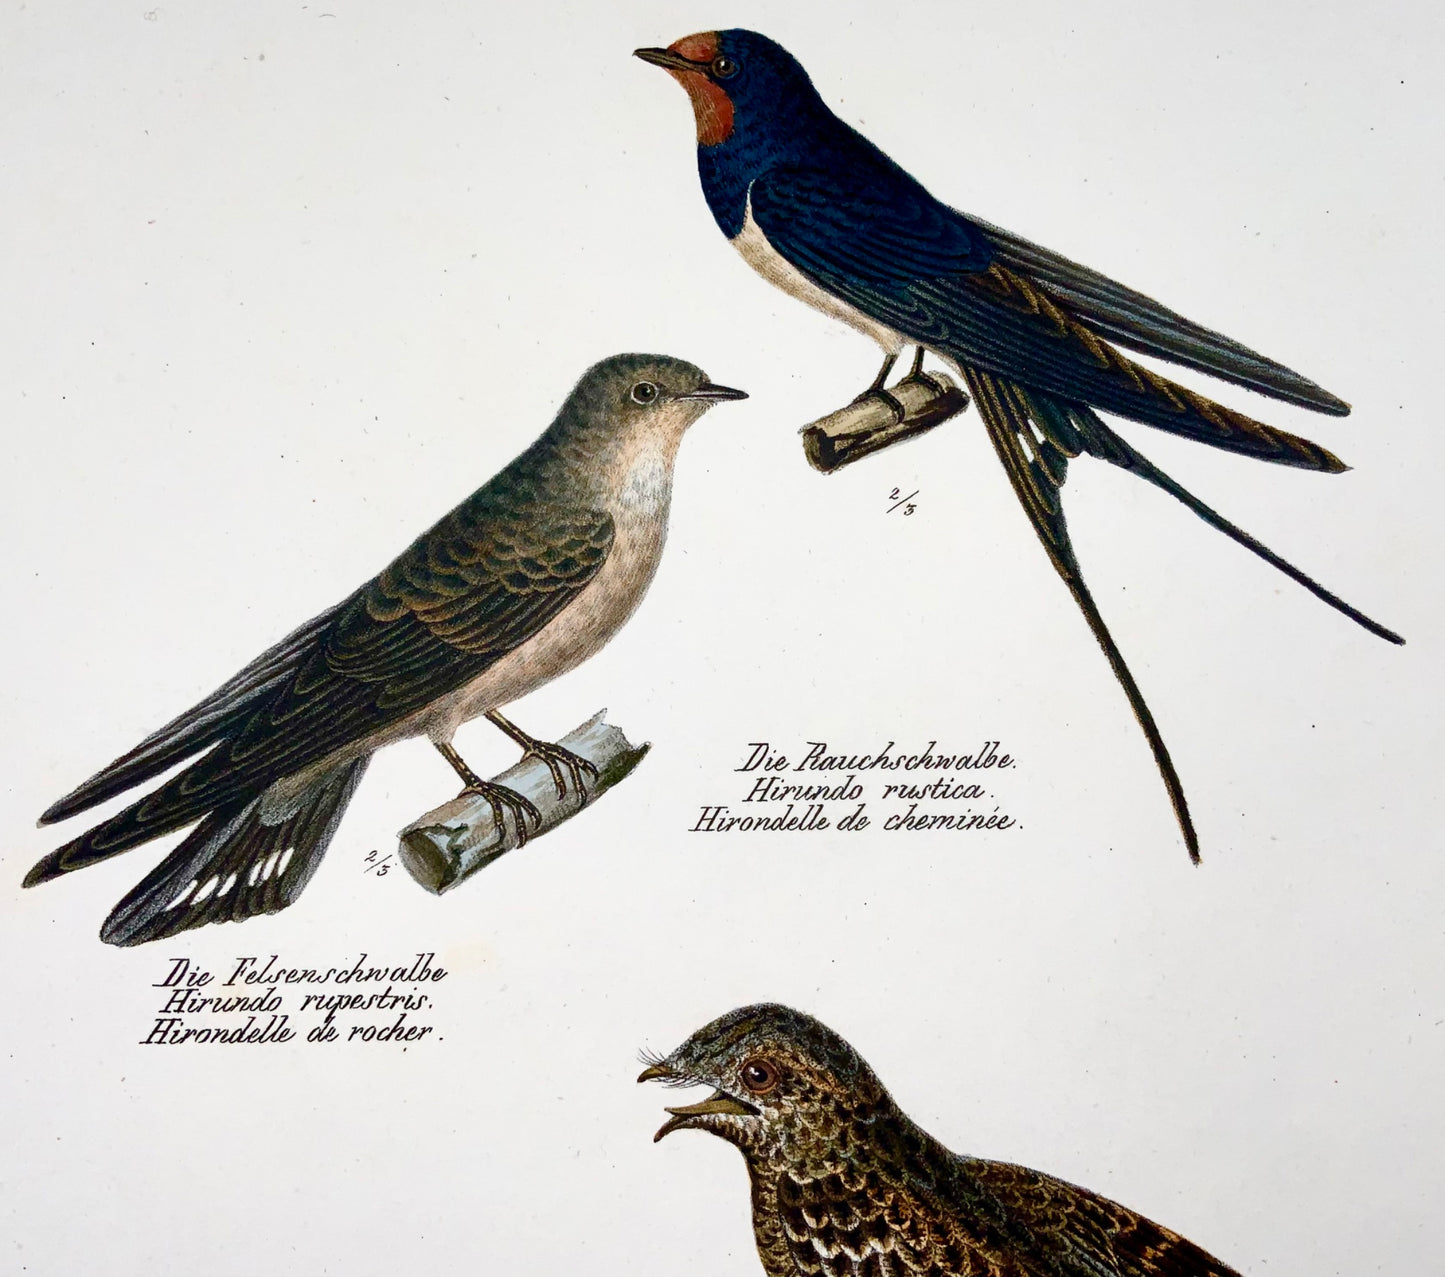 1830 SWALLOWS, Birds - Ornithology Brodtmann hand coloured FOLIO lithograph